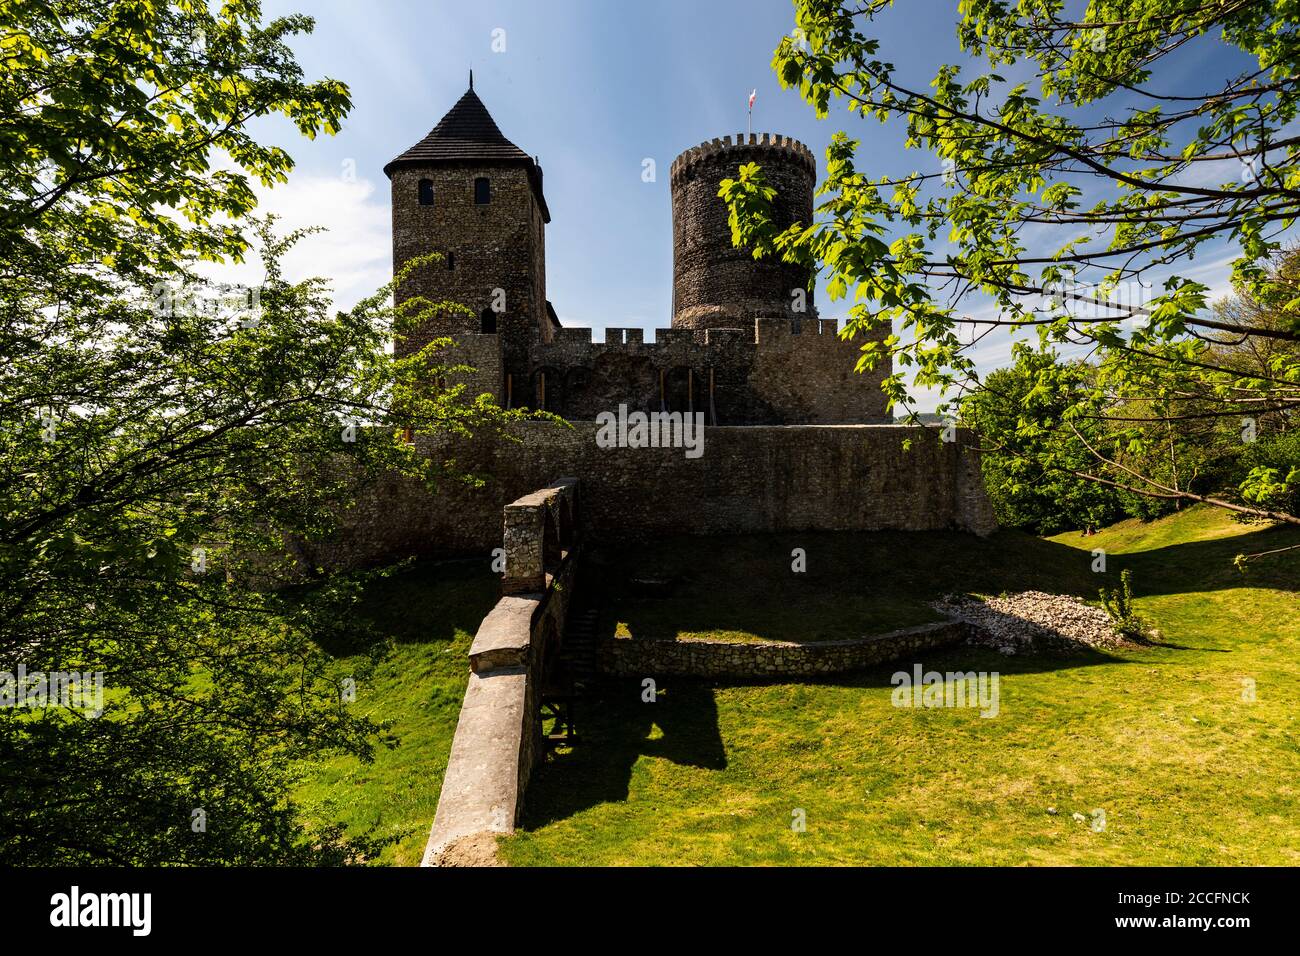 Europe, Poland, Silesian Voivodeship, Bedzin castle / Zamek w Bedzinie Stock Photo